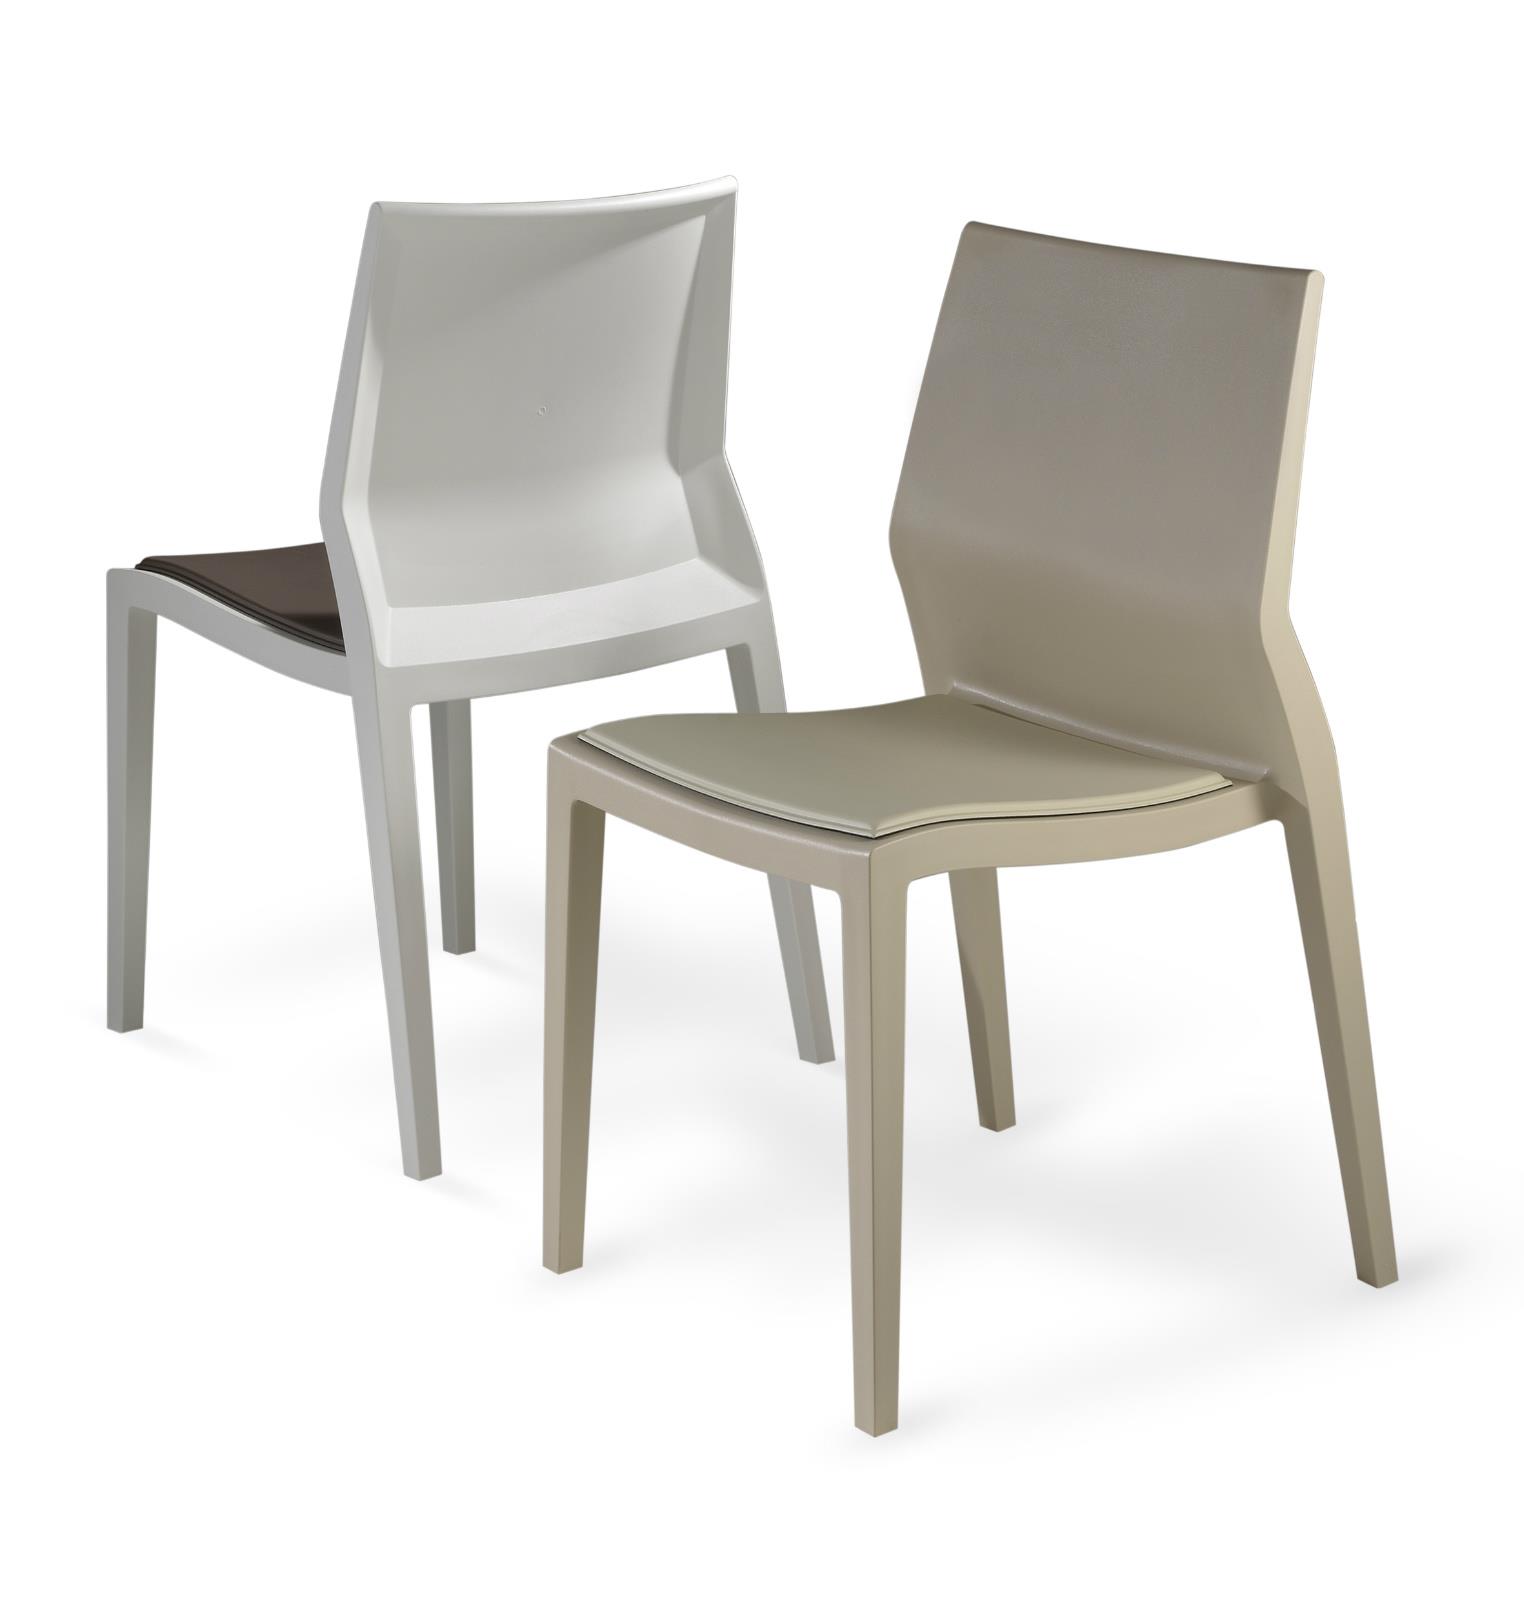 Hoth Chairs by IBEBI Design